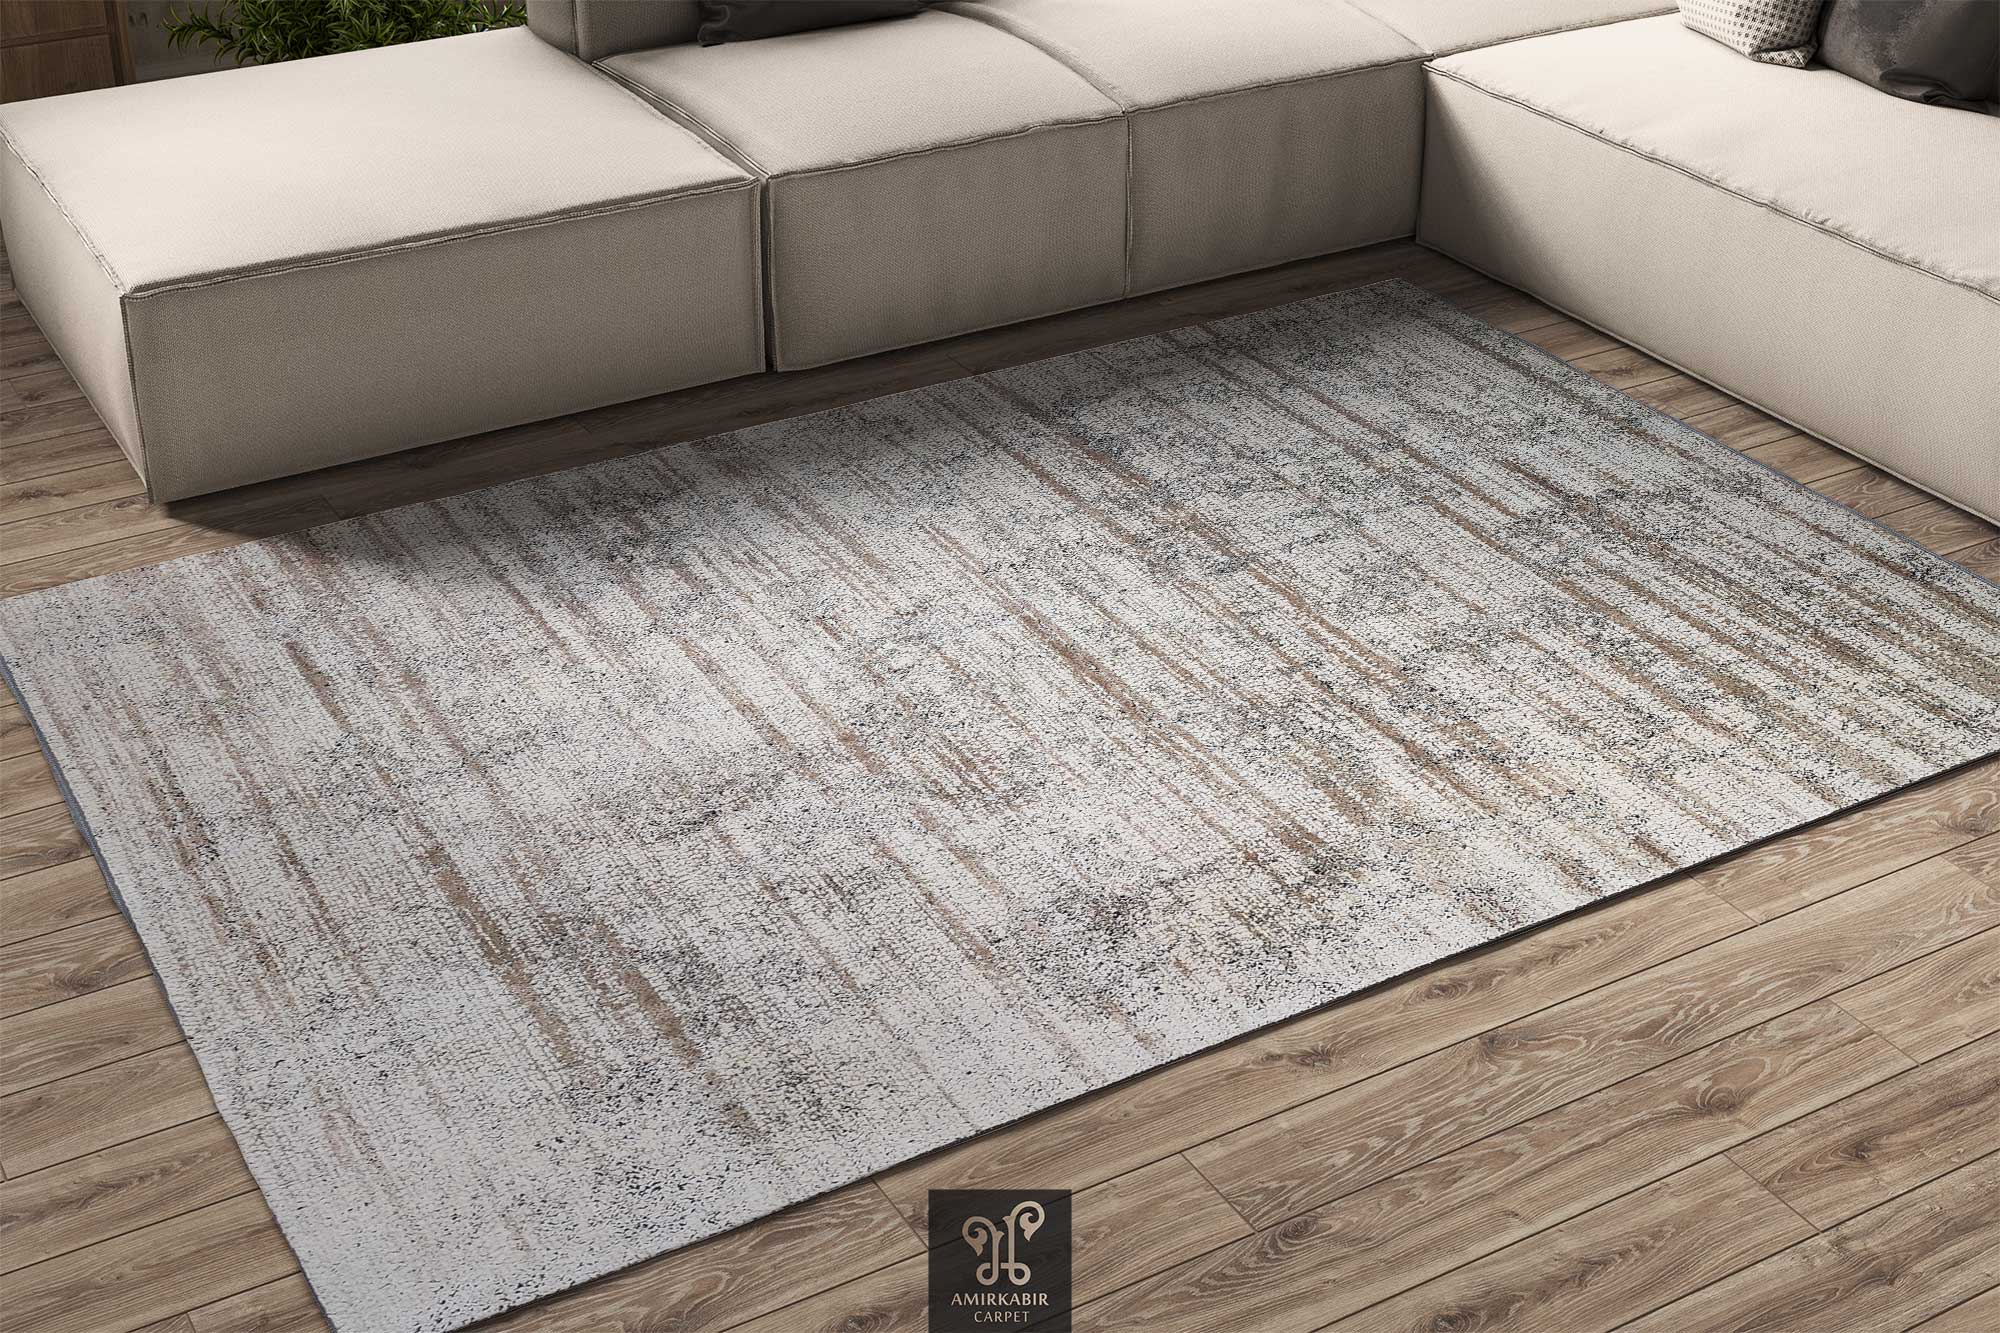 Vintage 400 reeds carpet -1400 Density RUG - Modern Carpet - Harmony Carpet 11104